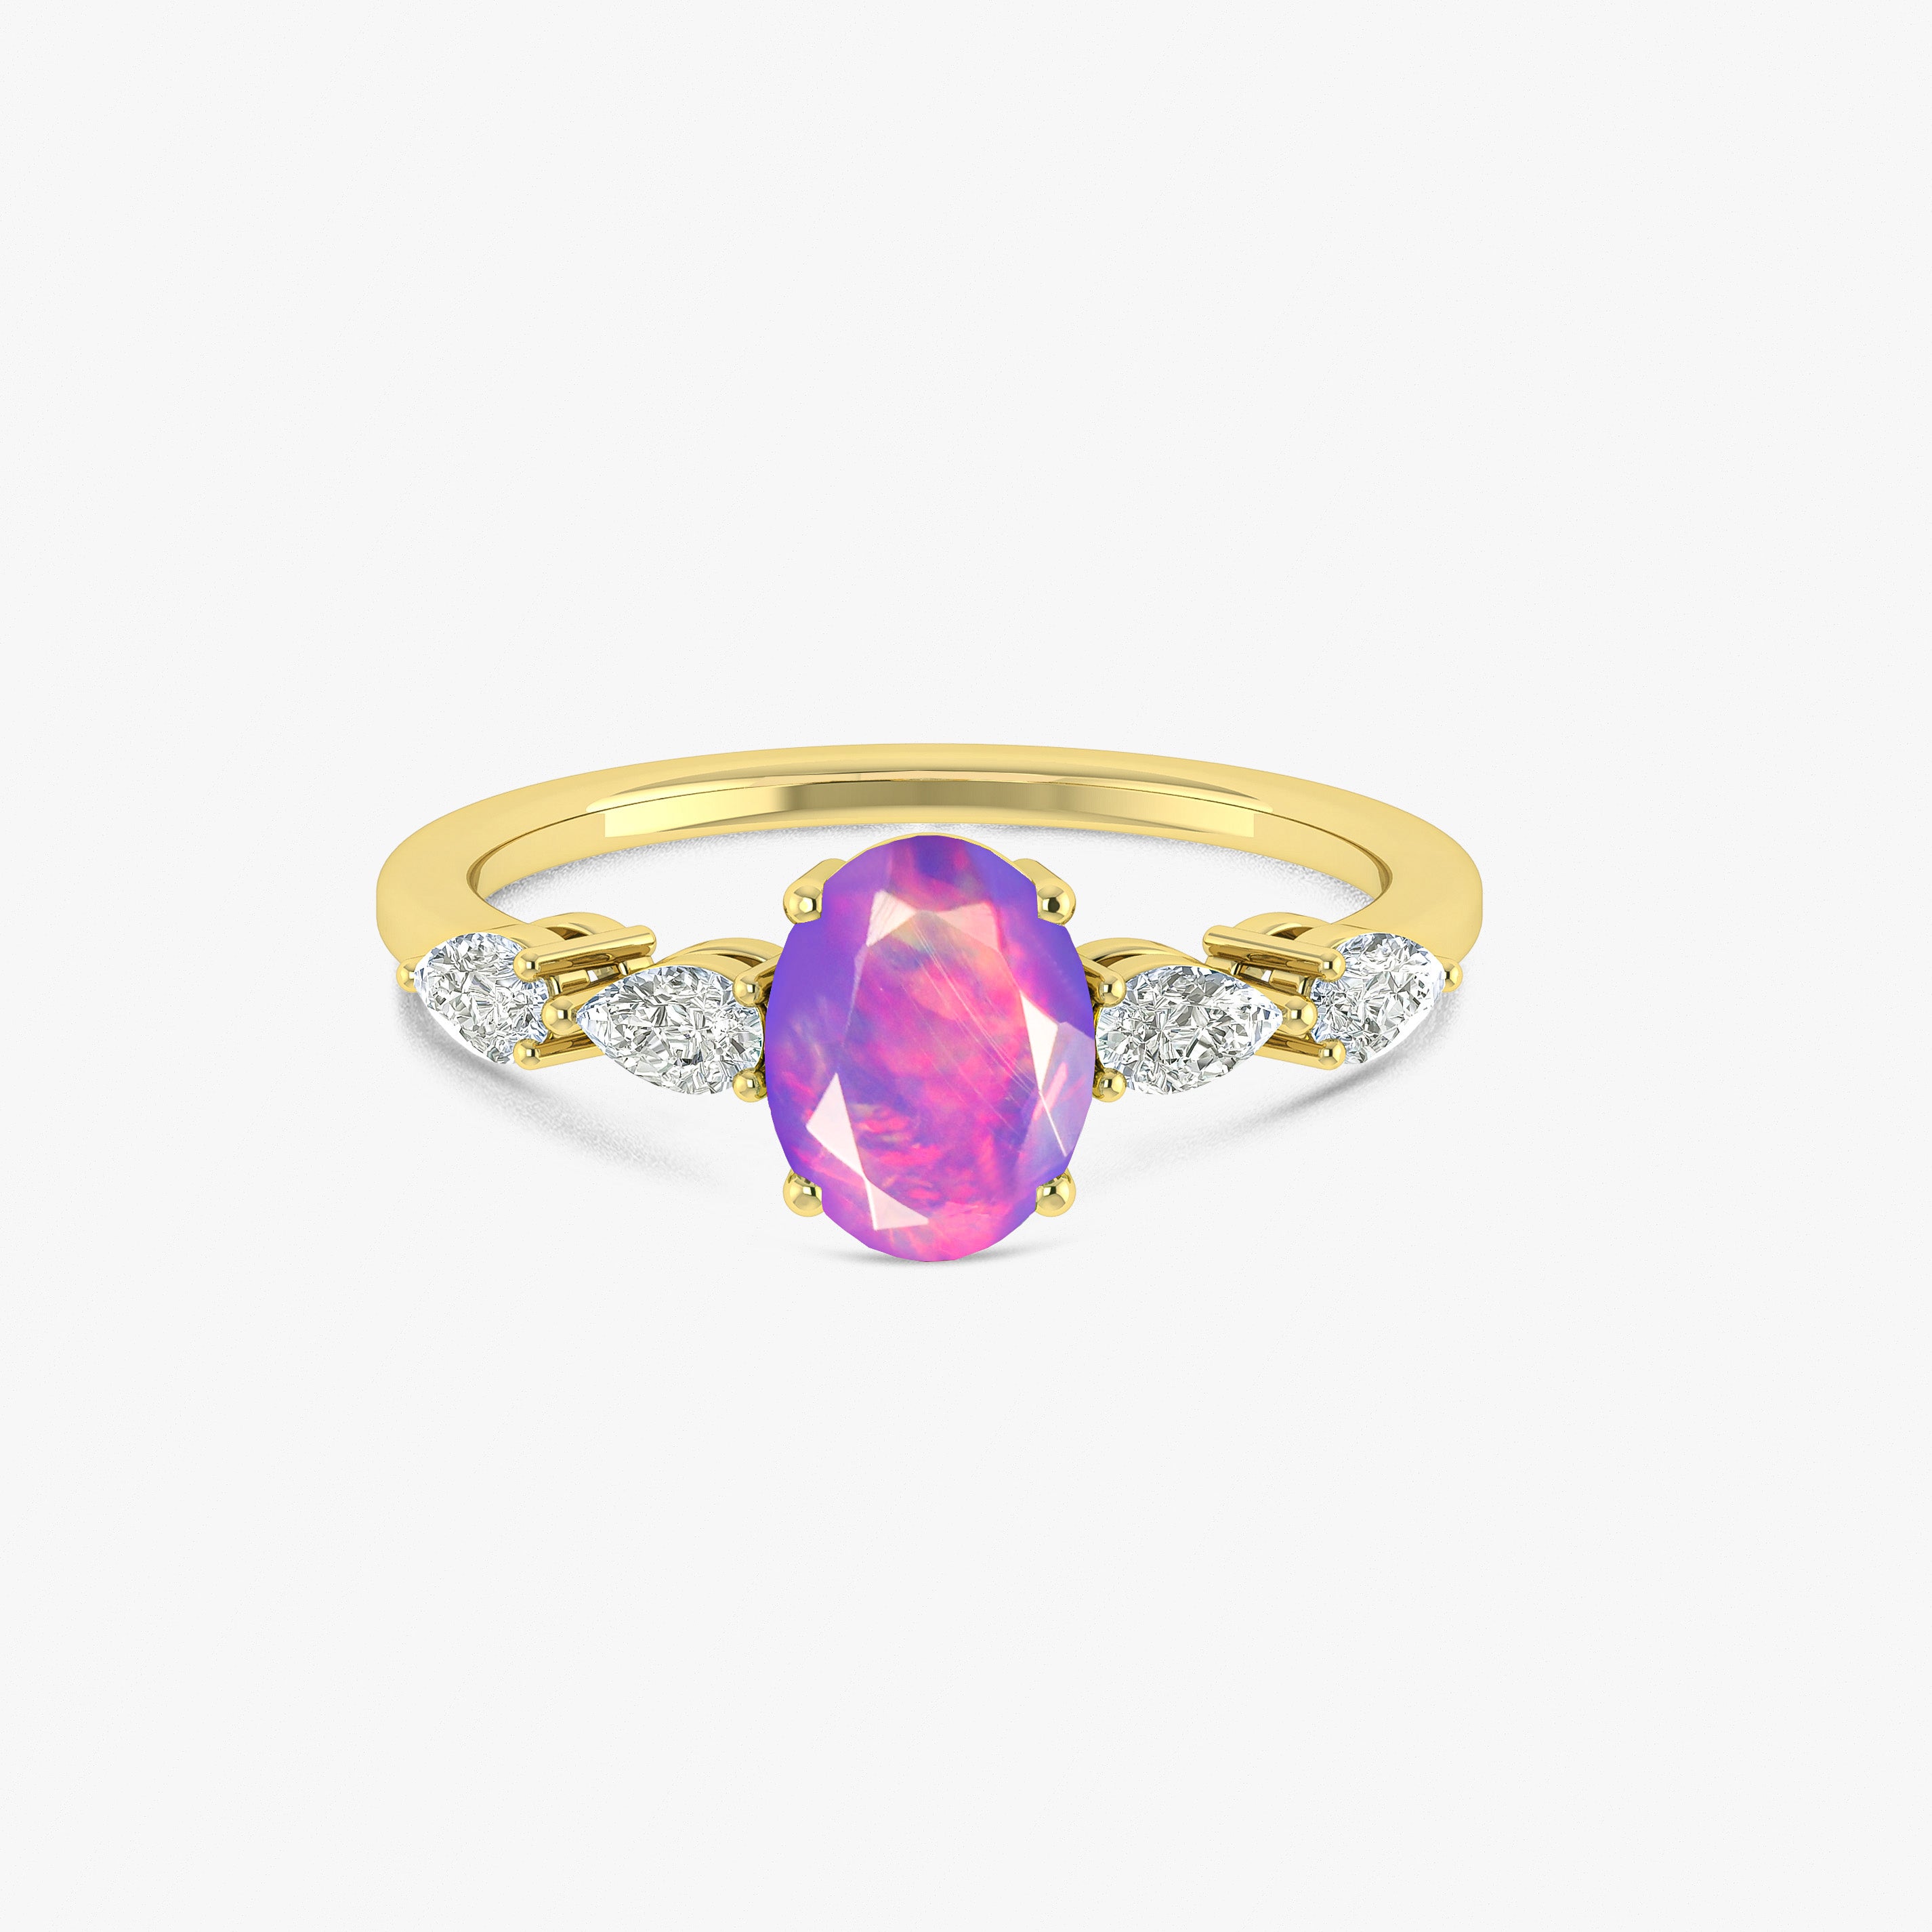 Lavender Opal Ring